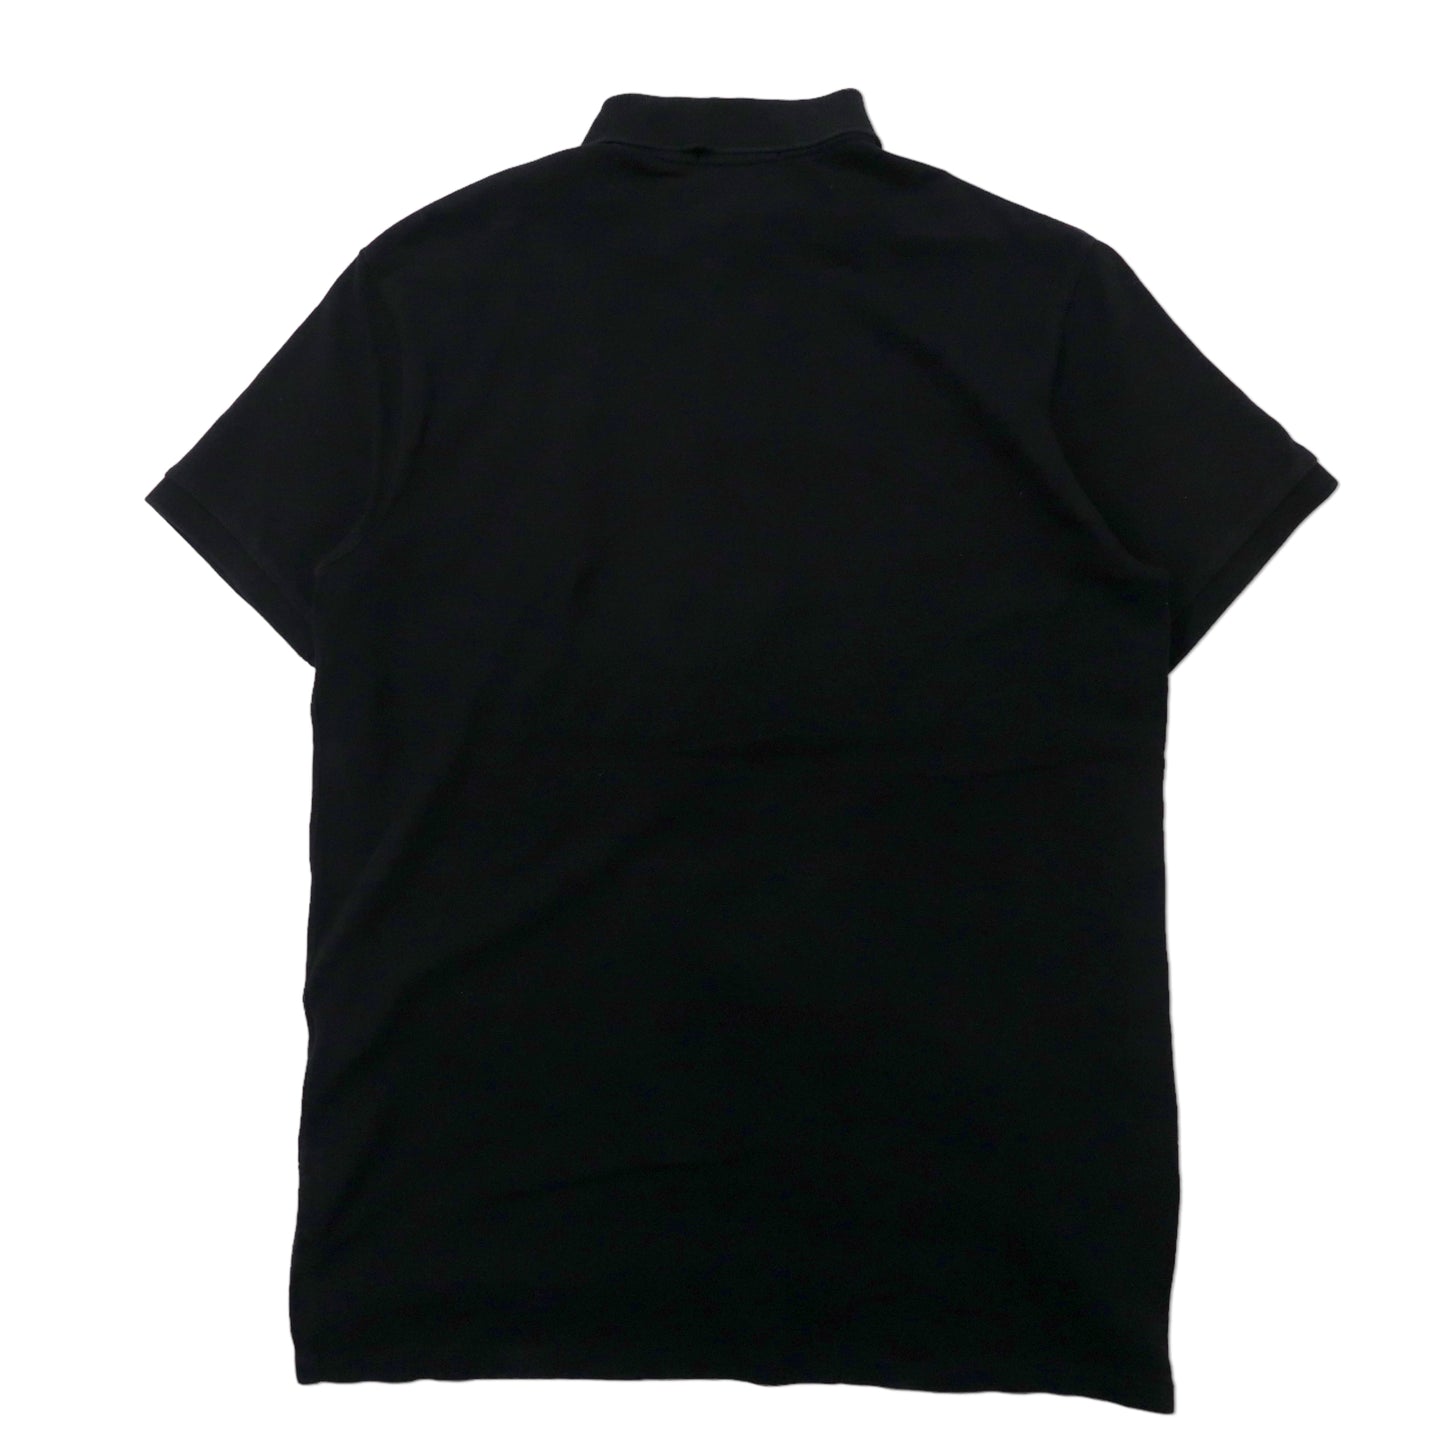 POLO RALPH LAUREN ポロシャツ 175 ブラック コットン CUSTOM FIT スモールポニー刺繍